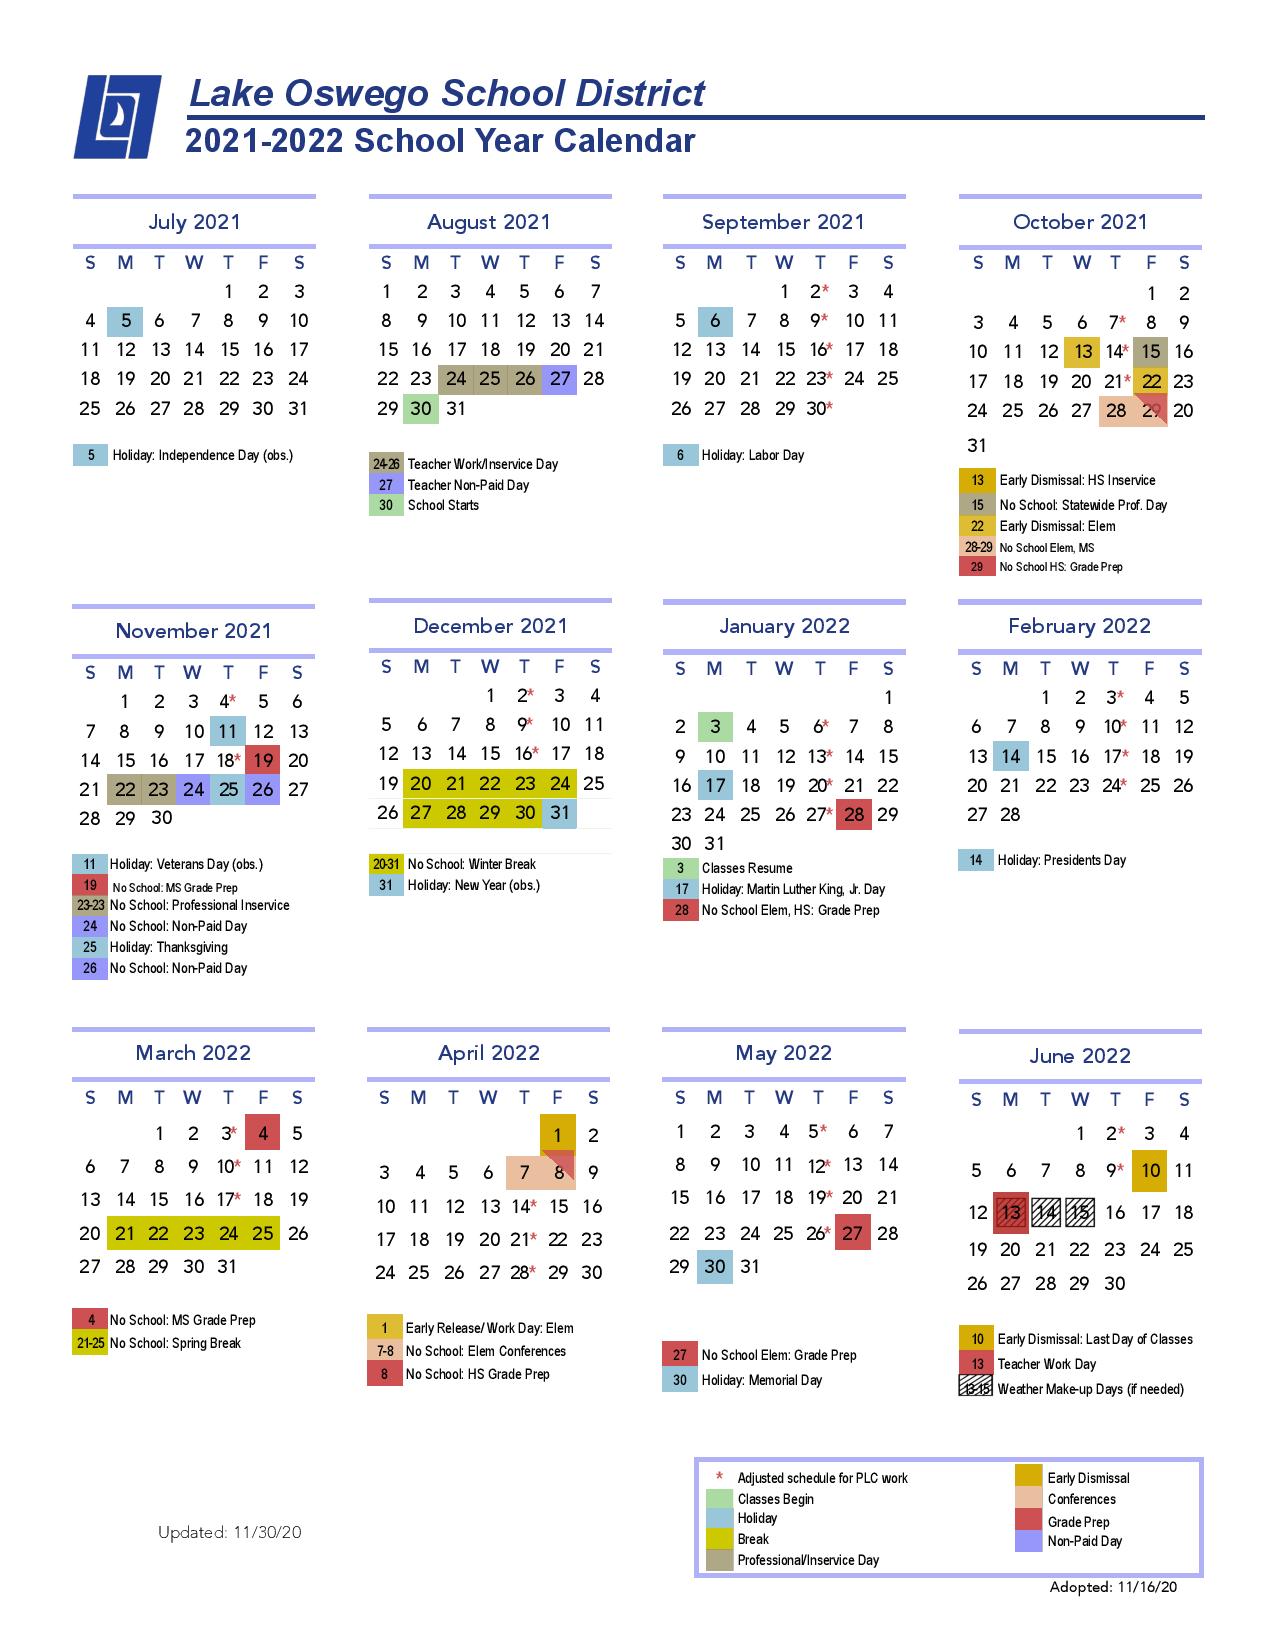 Lake Oswego School District Calendar 2021-2022 PDF